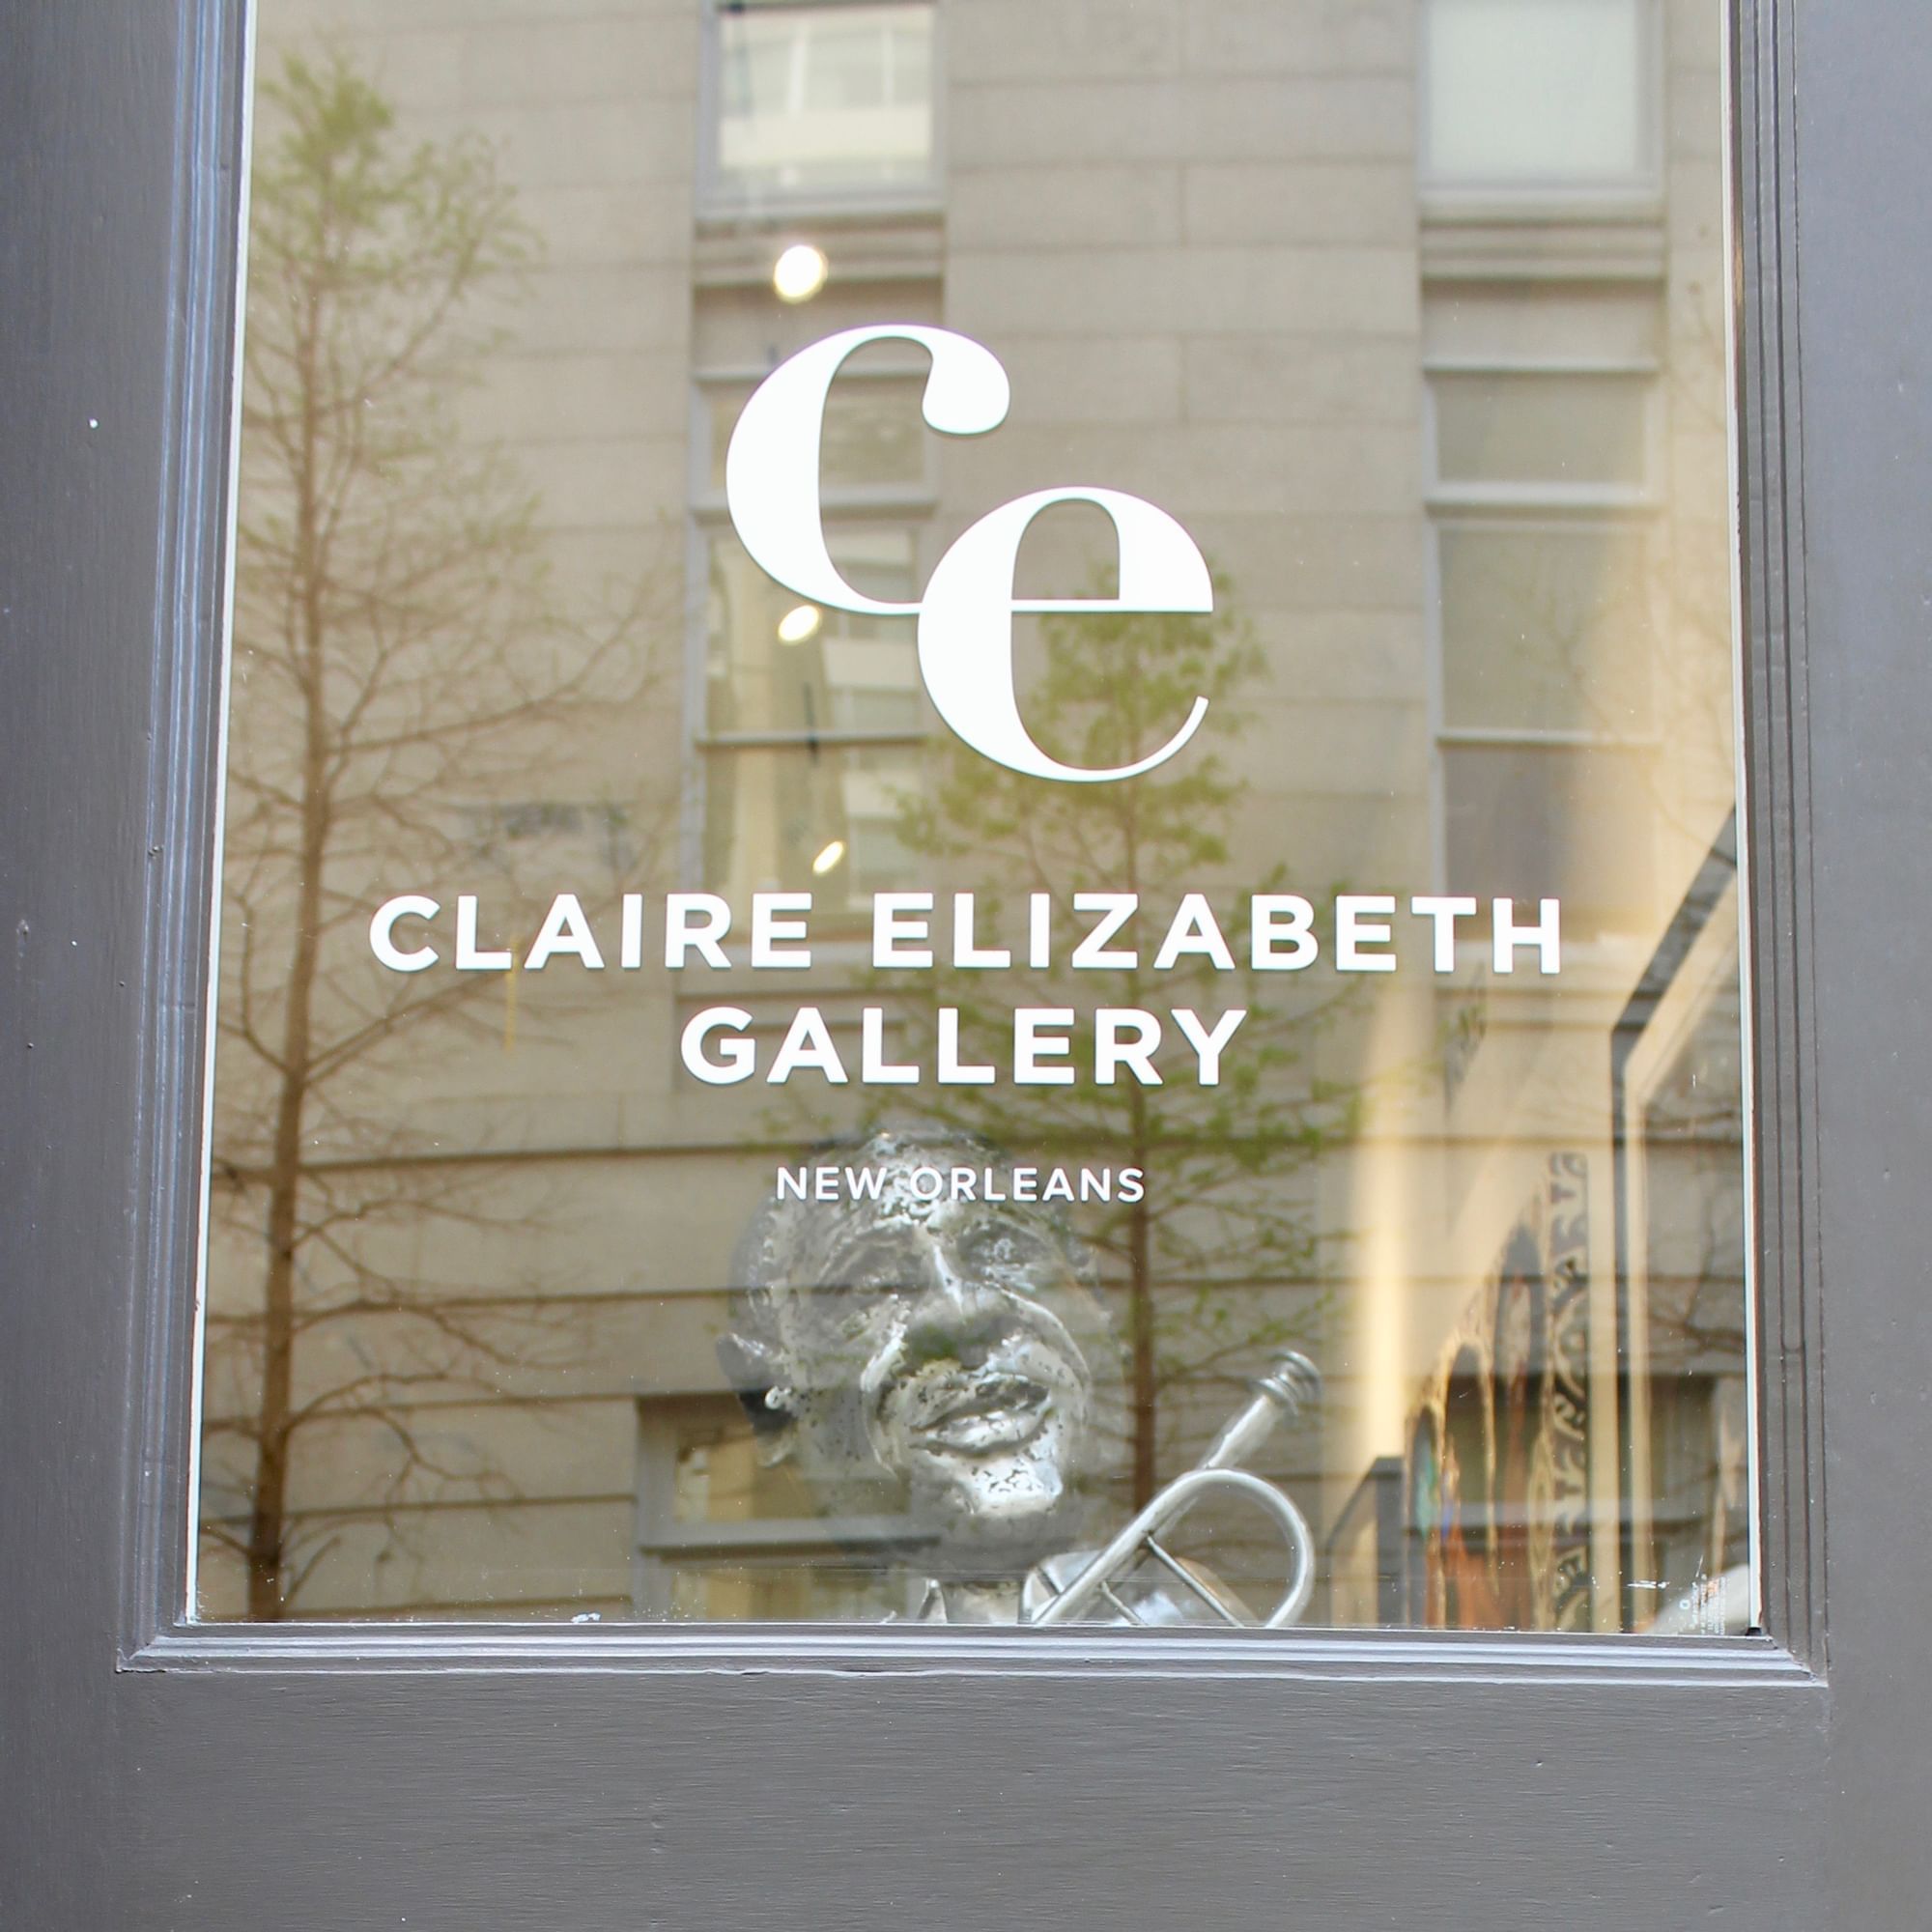 Exterior view of Claire Elizabeth Gallery near La Galerie Hotel